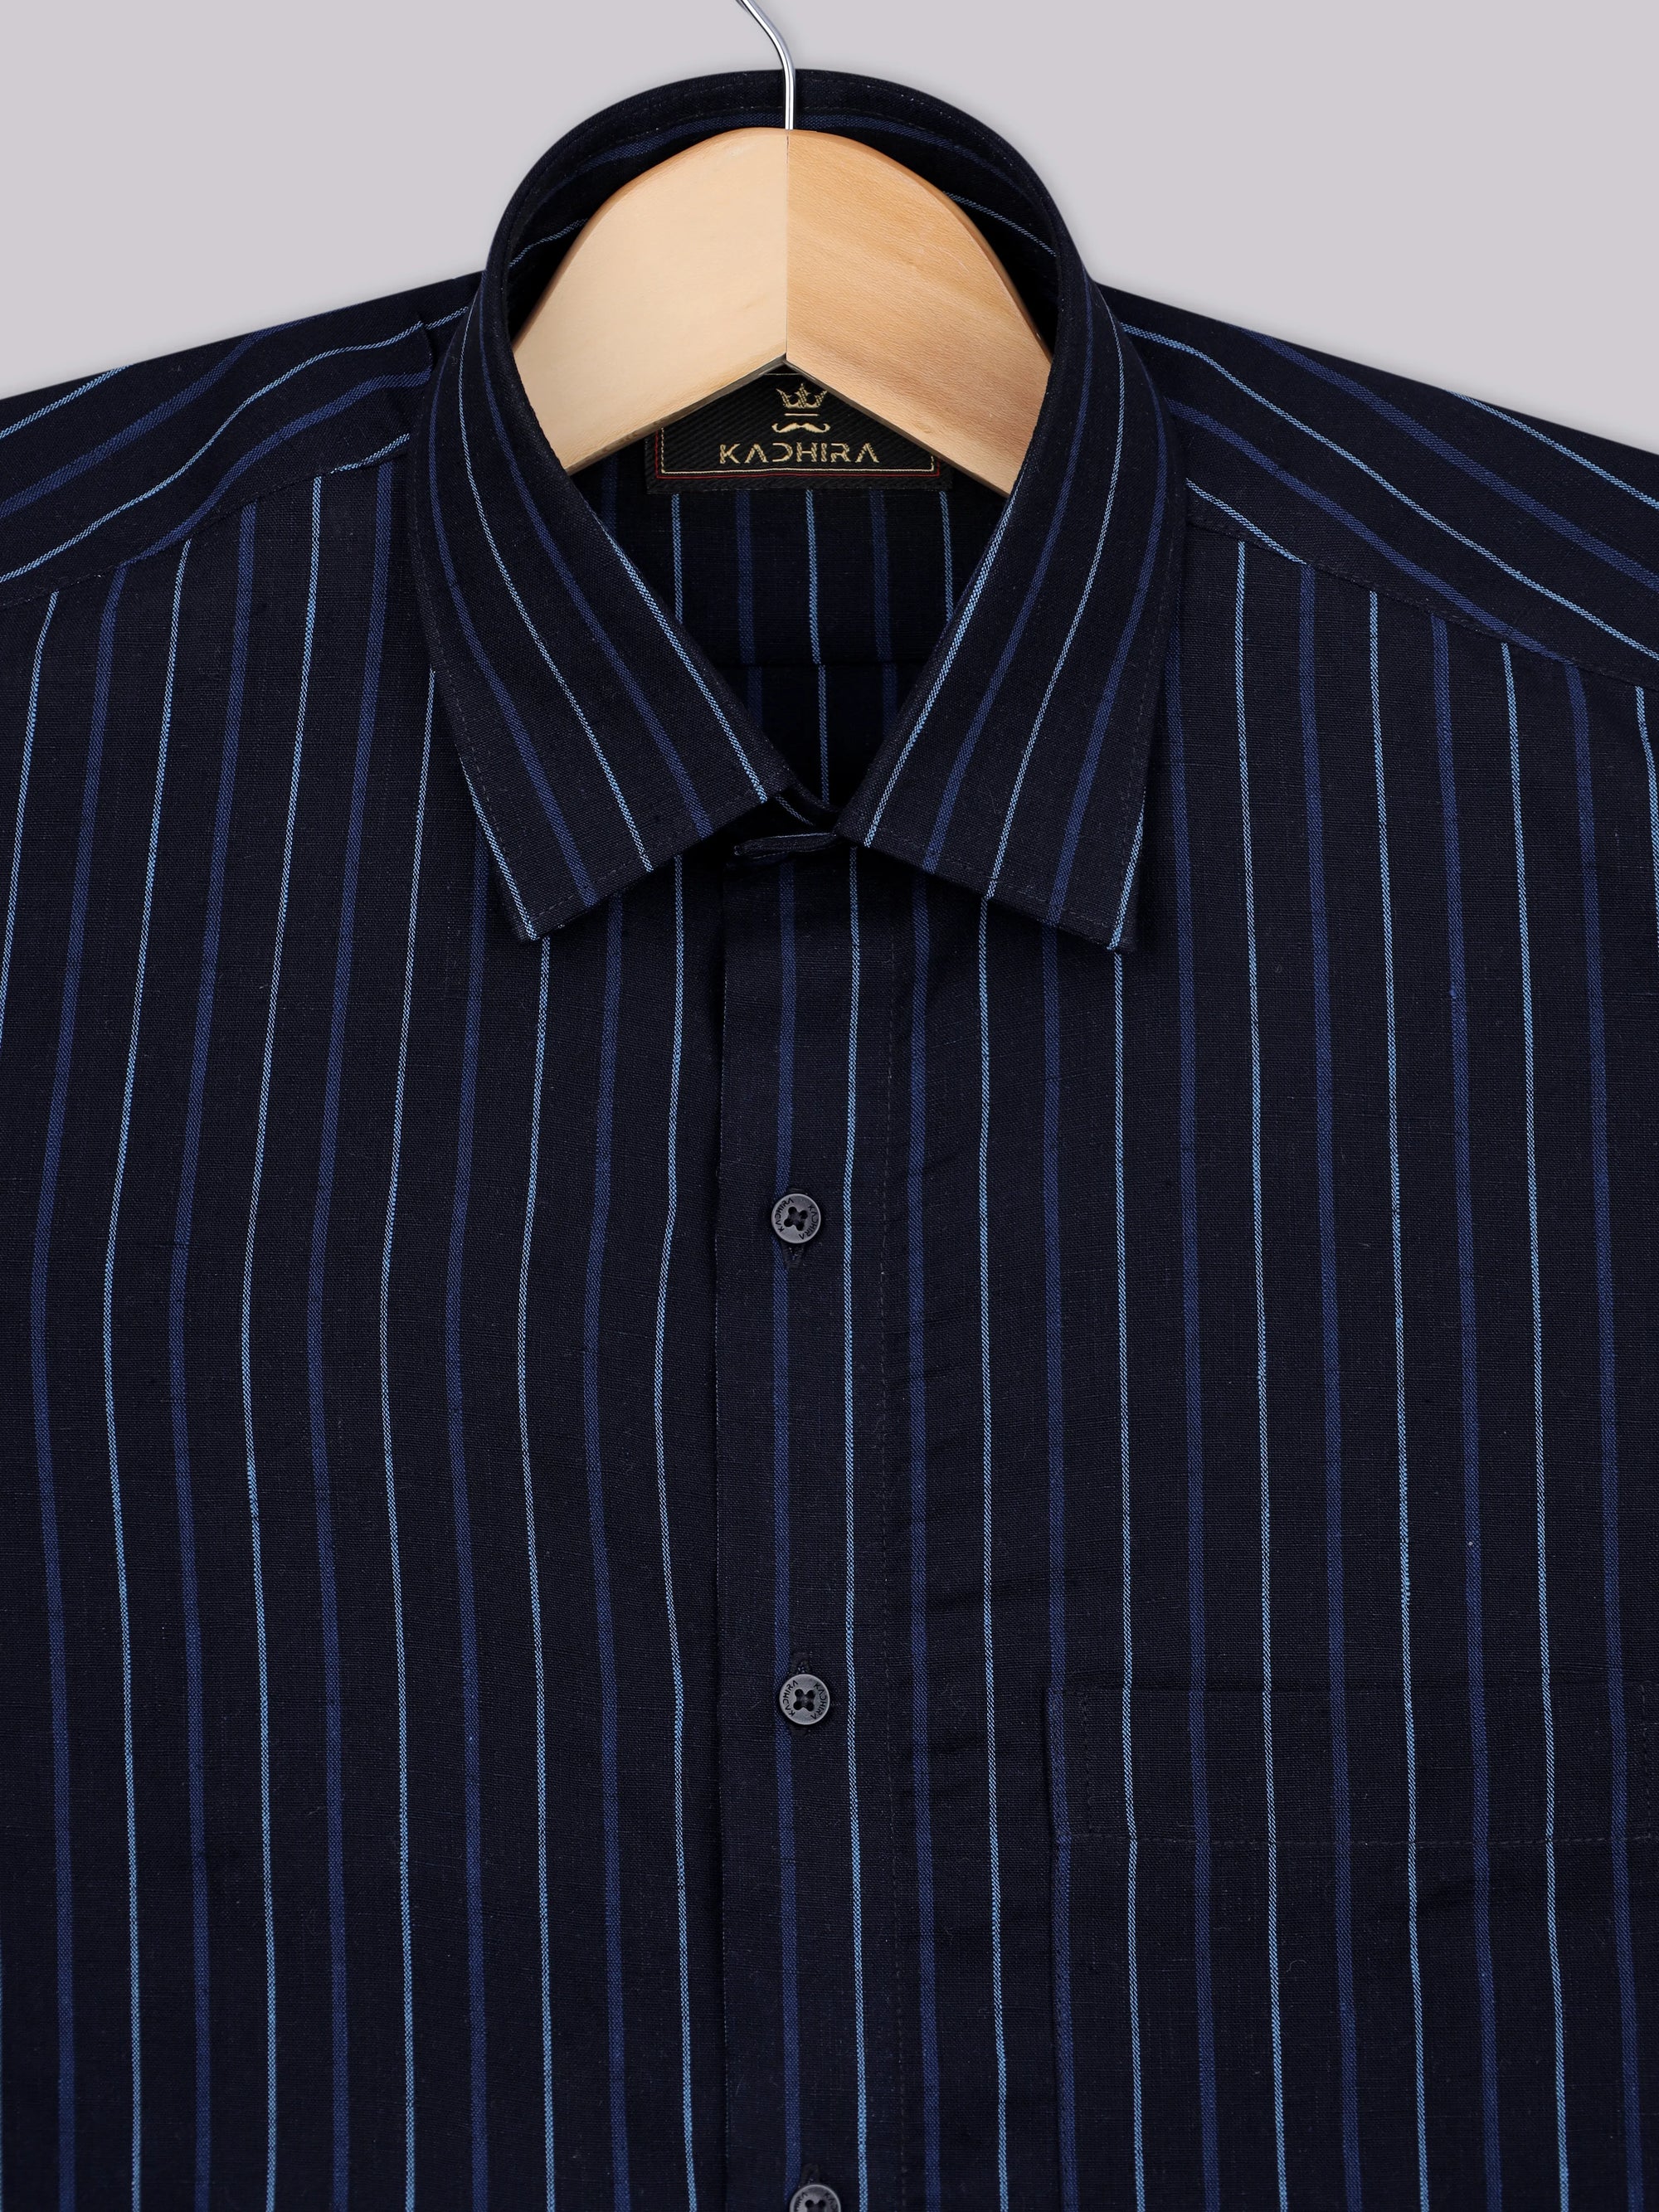 Navy Blue With White Stripe Premium Cotton Shirt